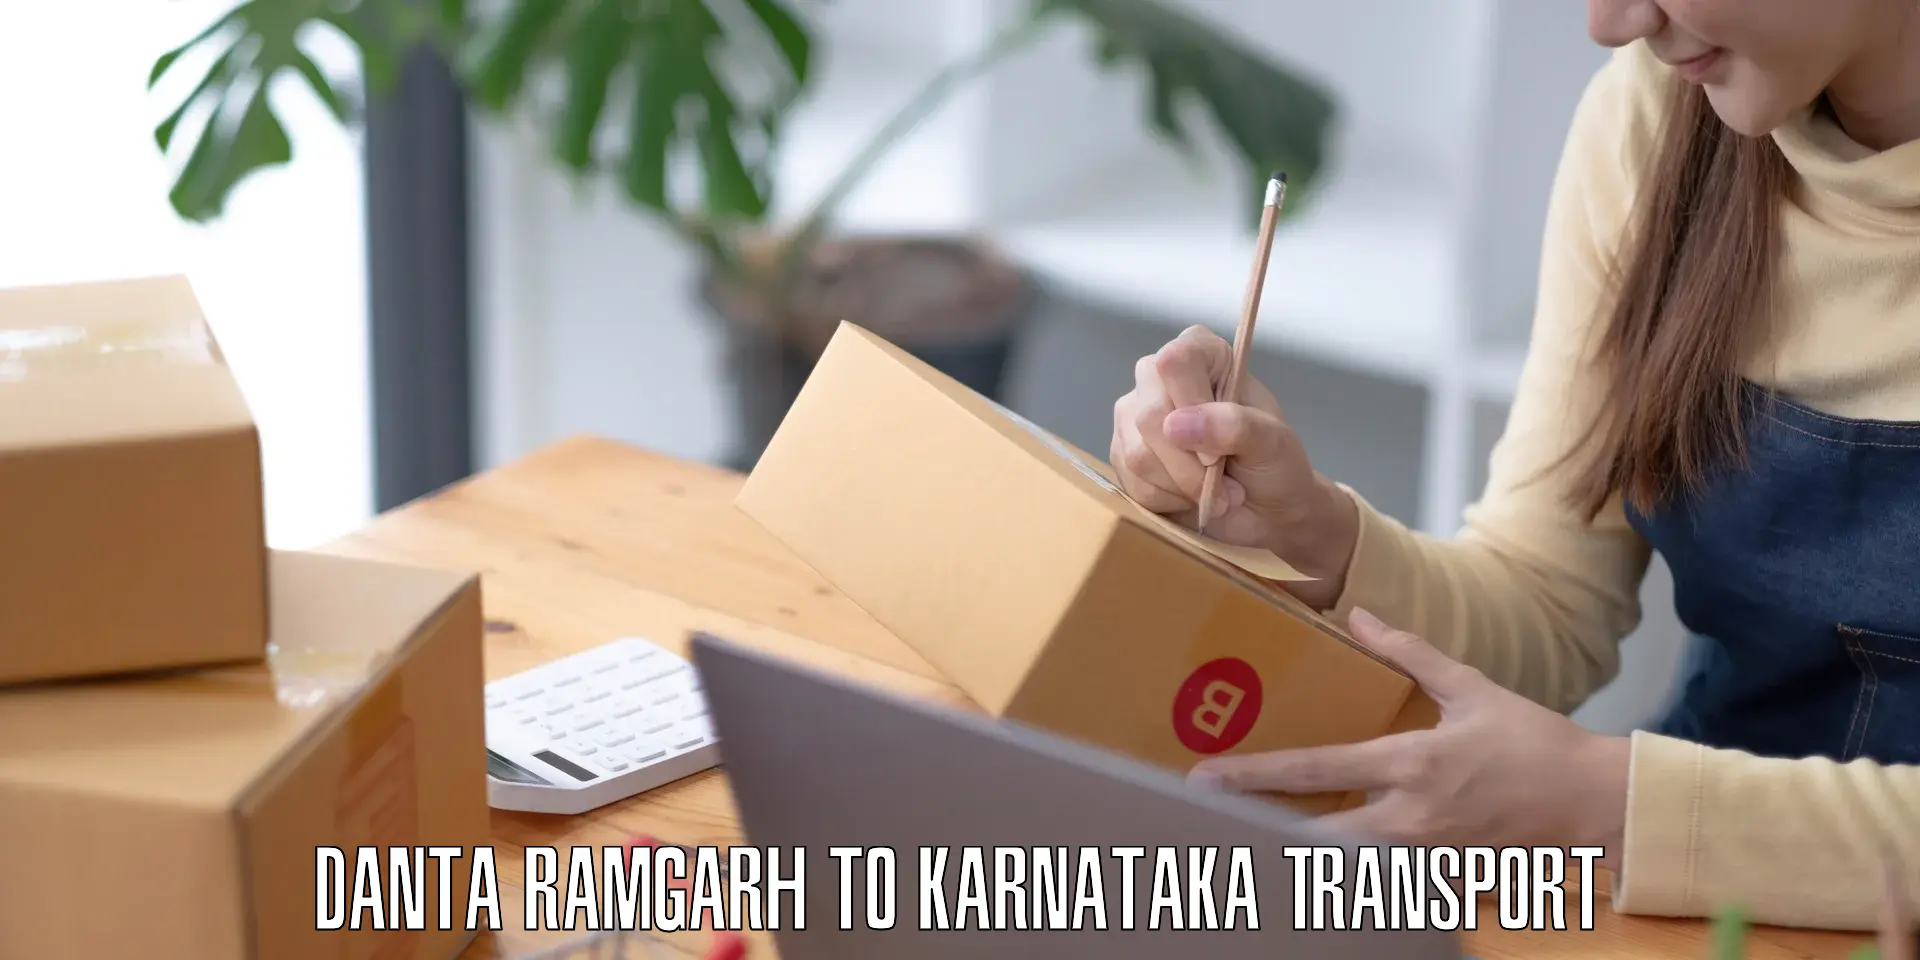 Transport bike from one state to another Danta Ramgarh to Karnataka